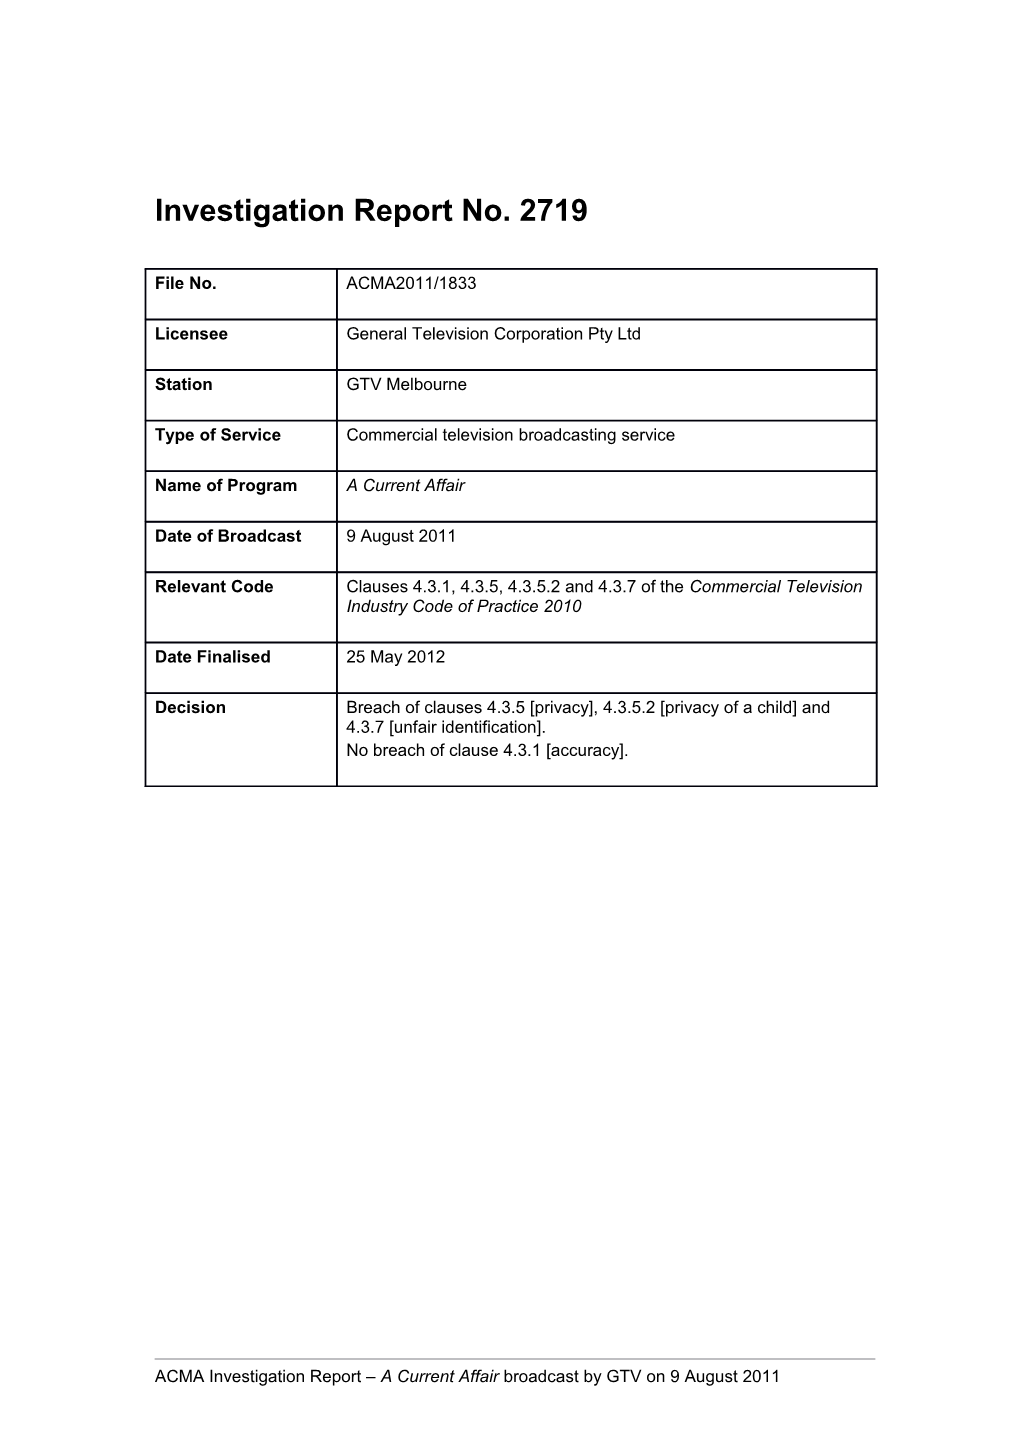 GTV Melb - ACMA Investigation Report 2719